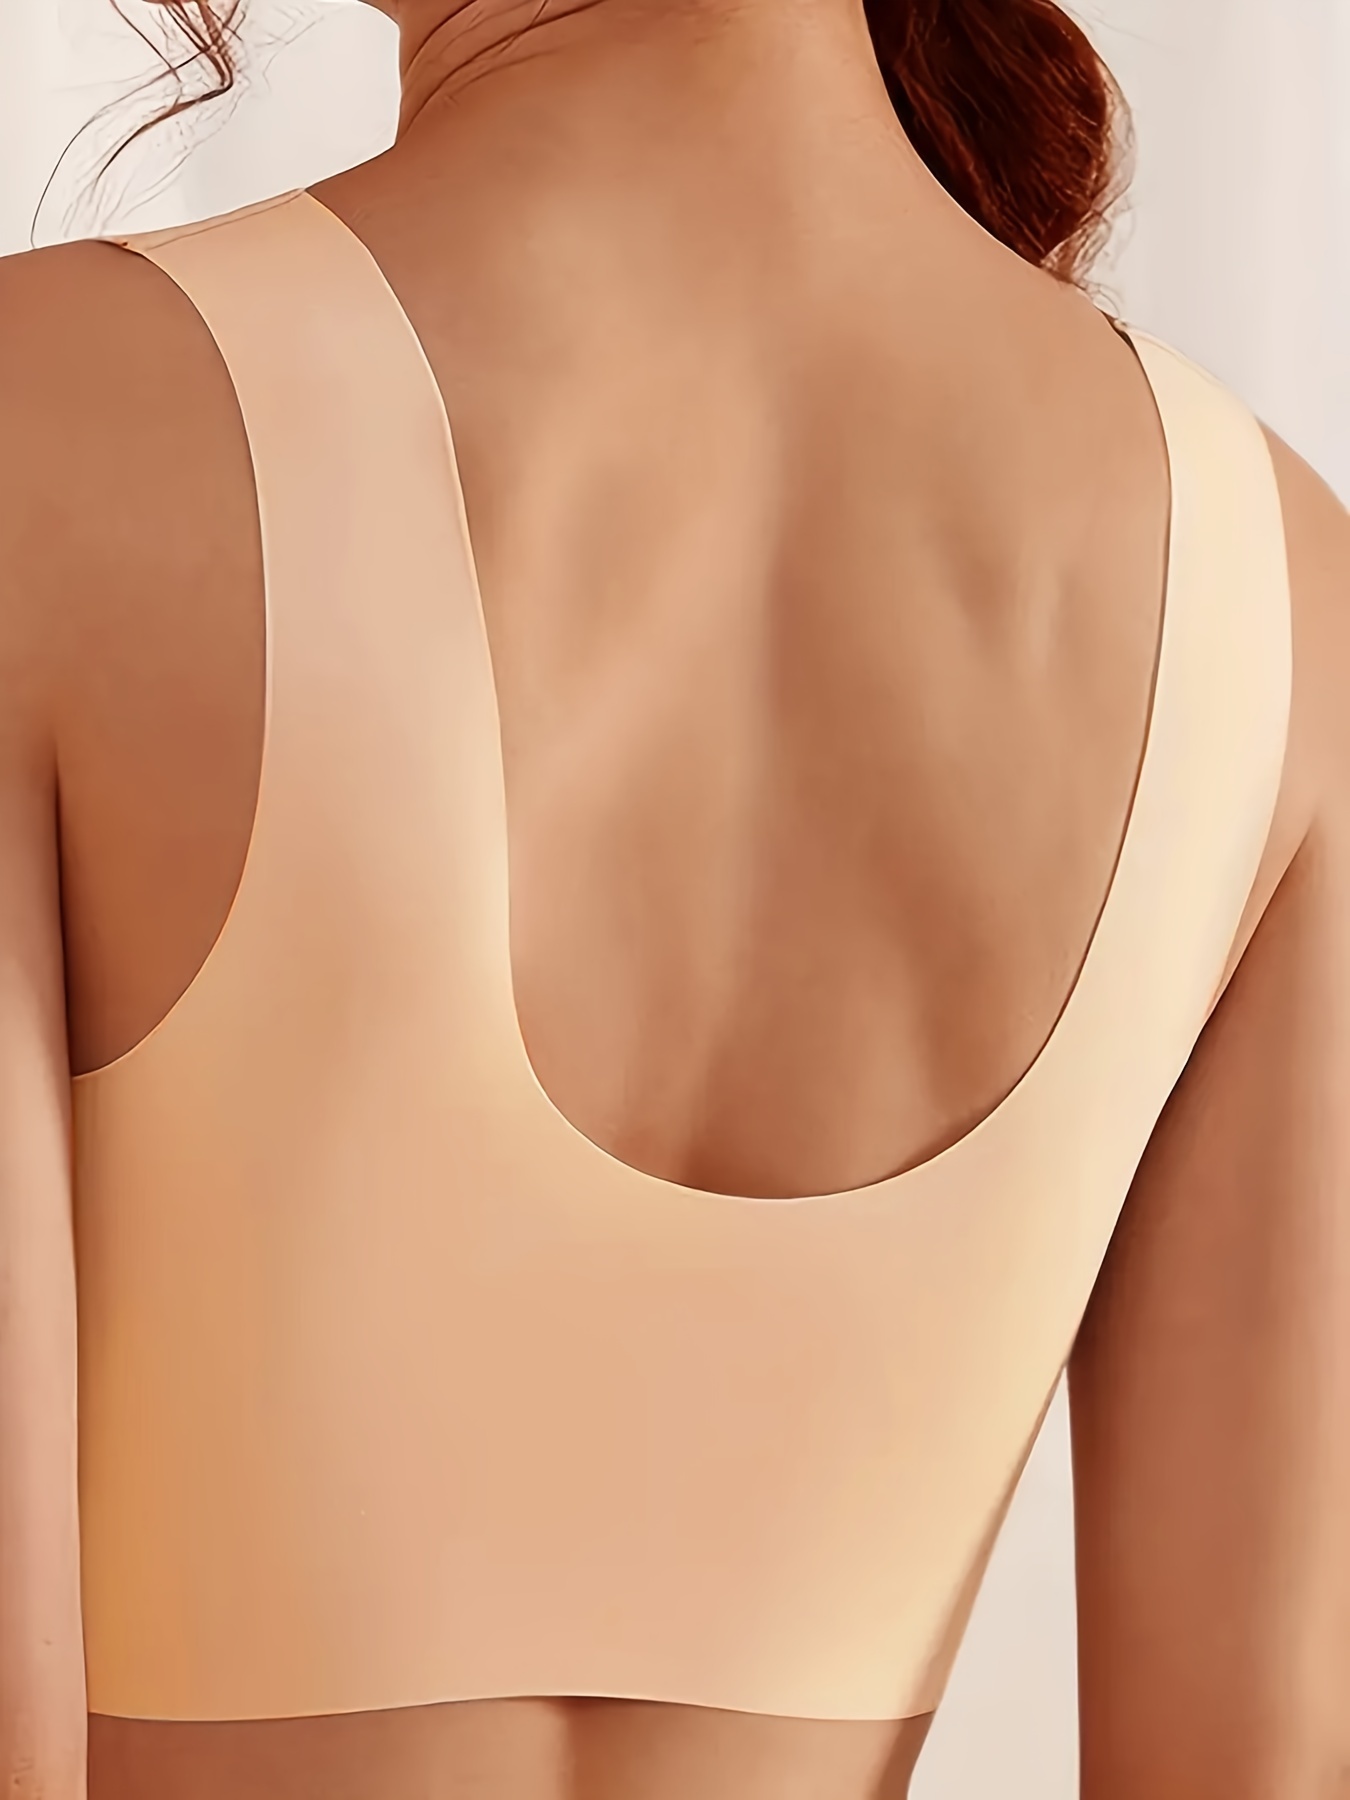 Posture Corrector Lift Up Bra Women New Desigh X-bra Breathable